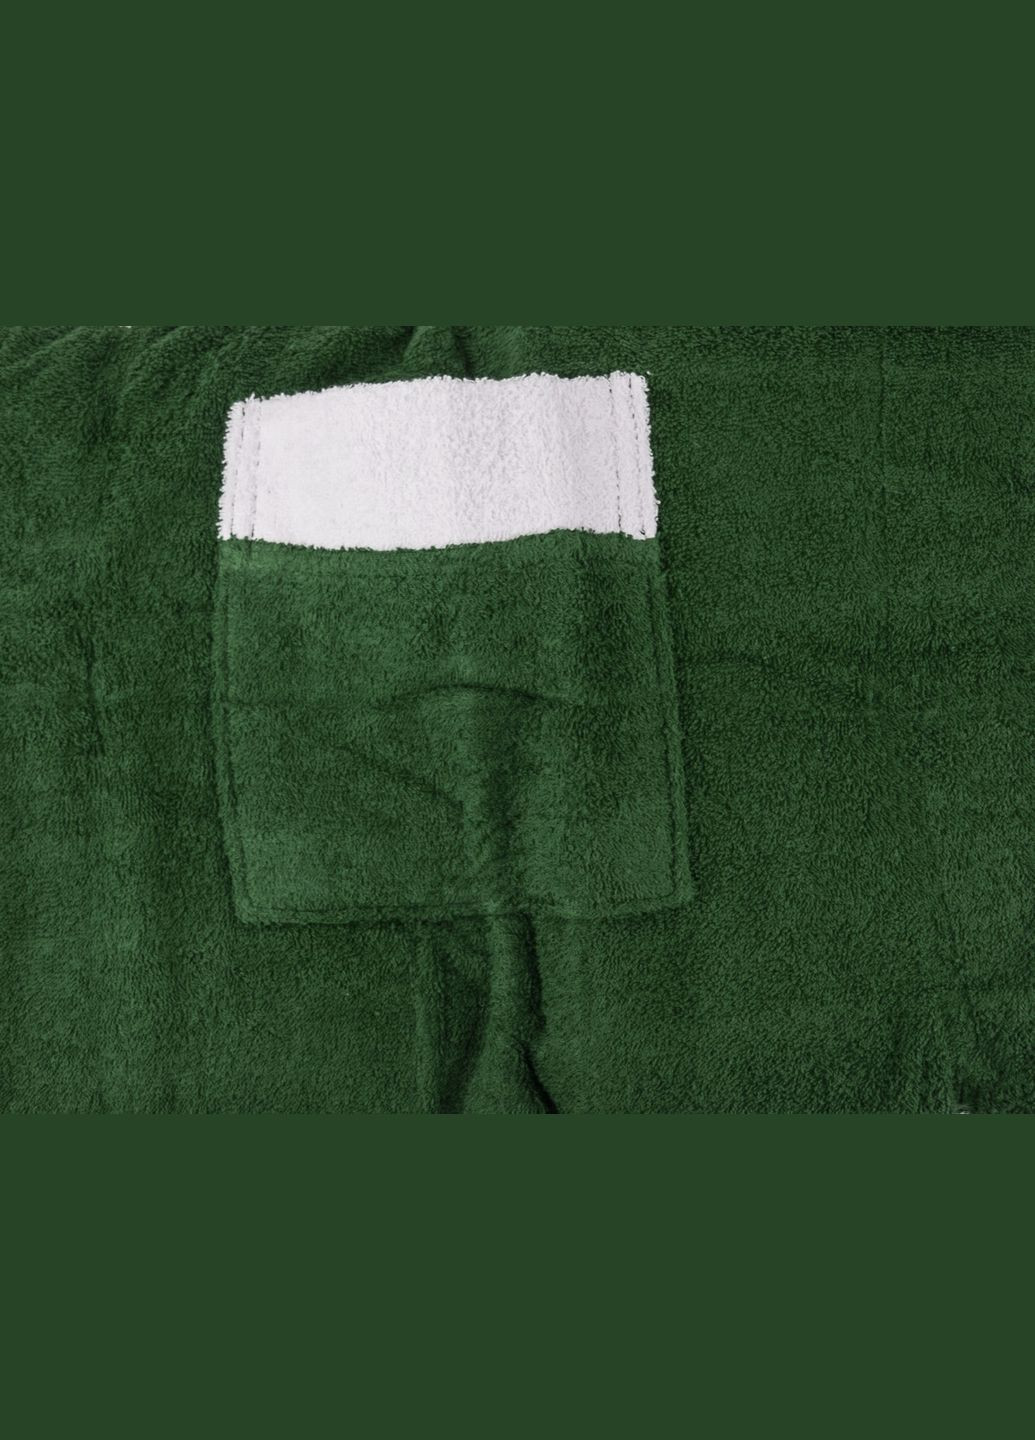 Набор для сауны Cotton мужской Green (2 полотенца + тапочки) Gursan (288046391)